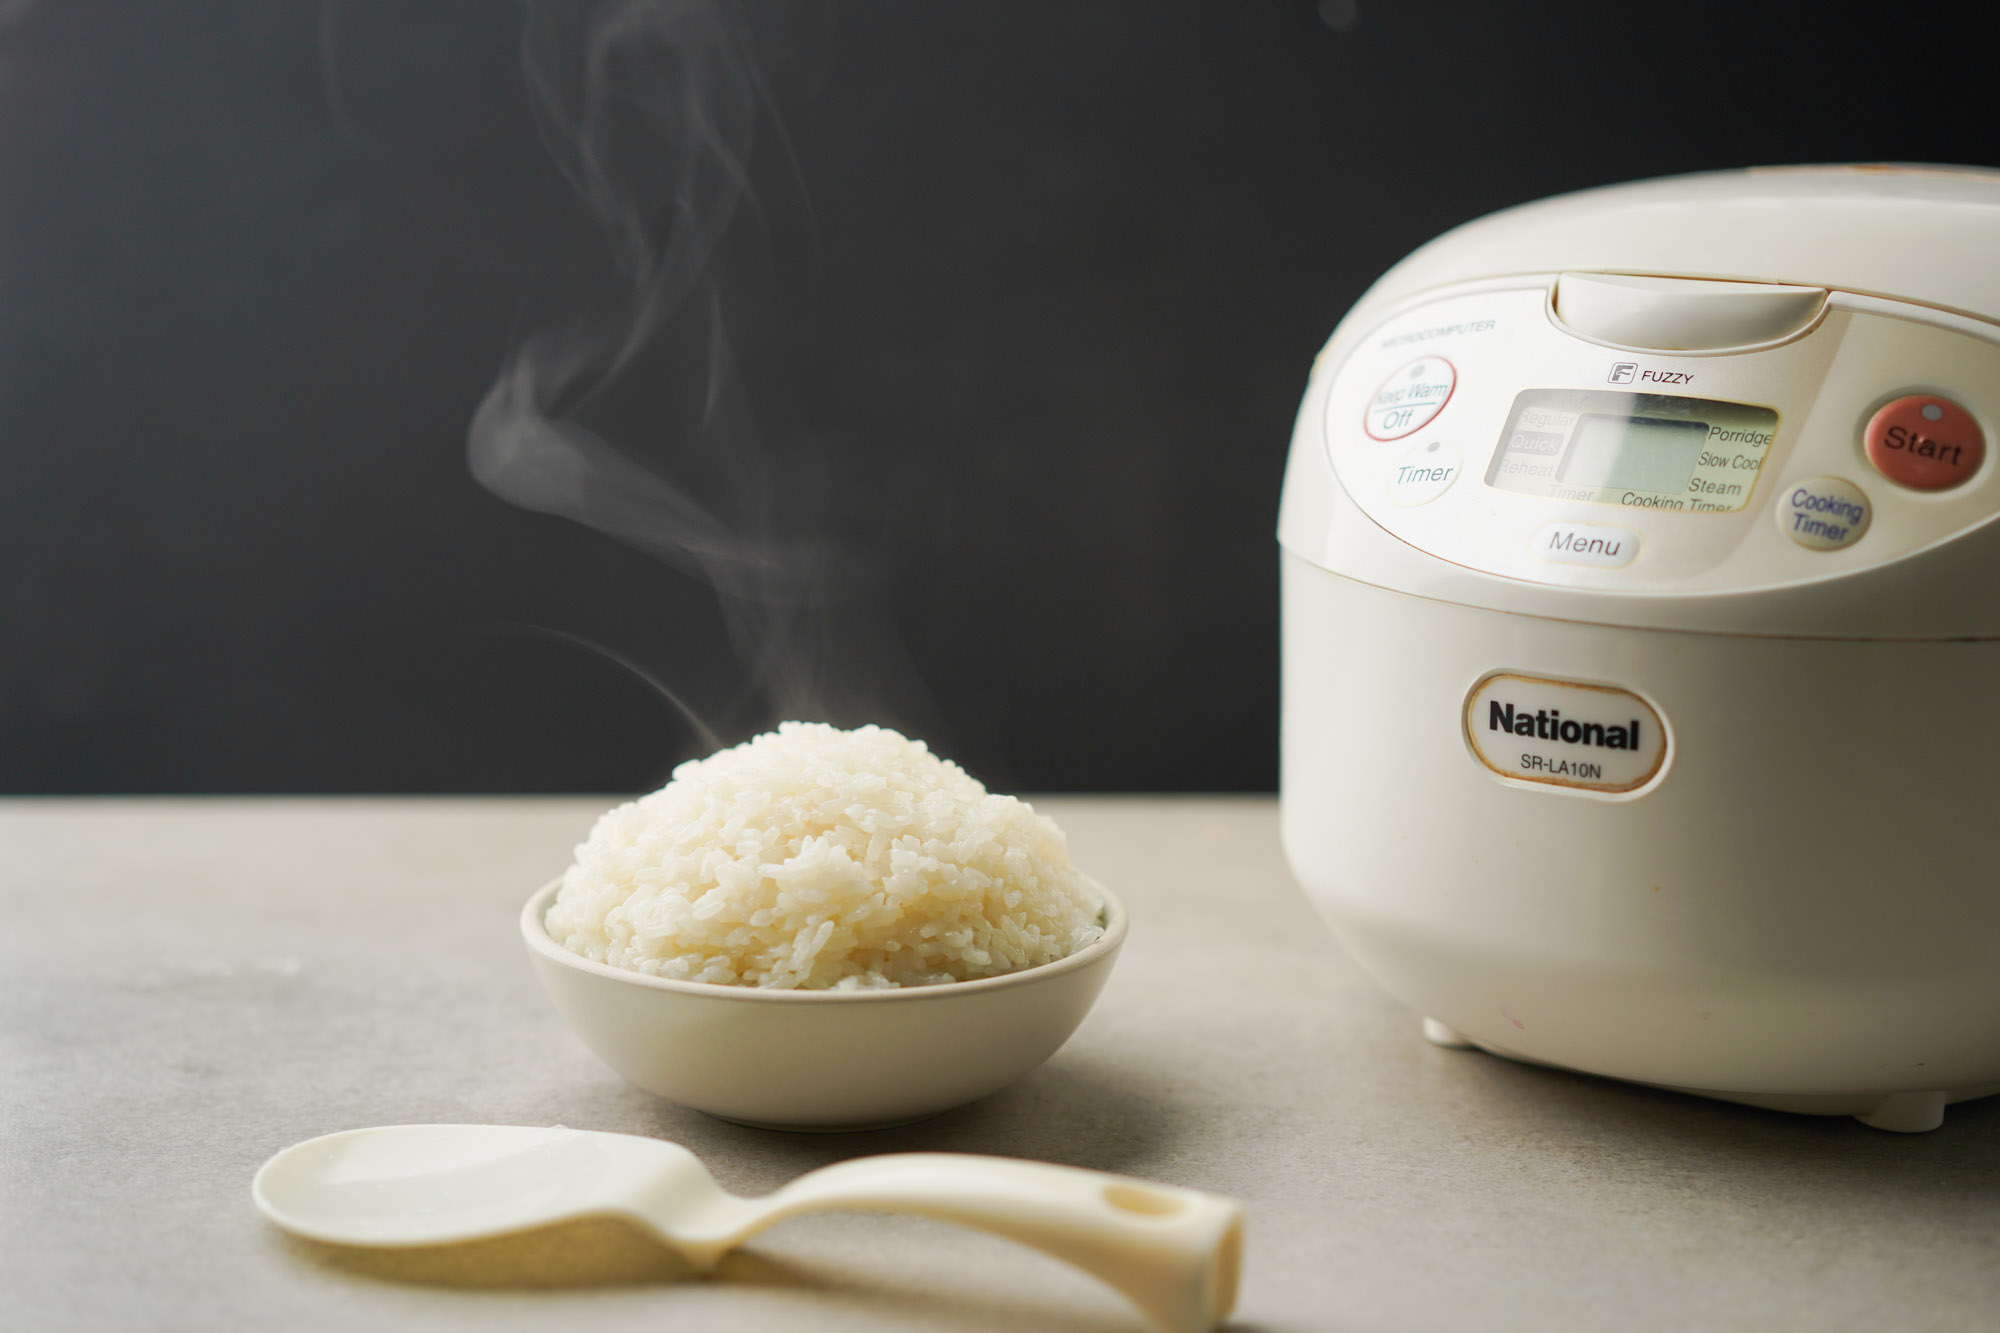 https://www.hungryhuy.com/wp-content/uploads/steamy-sticky-rice.jpg